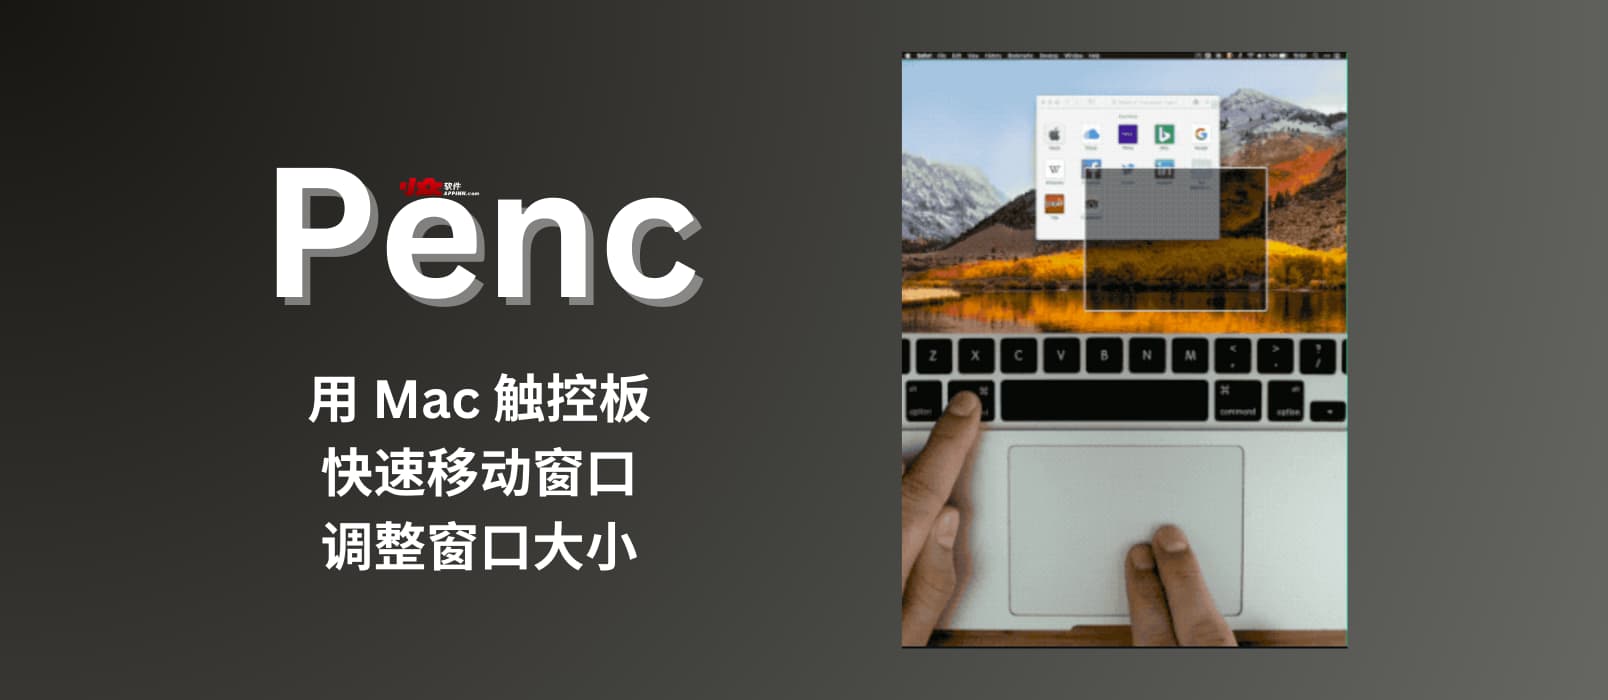 Penc - 用 Mac 触控板快速移动窗口、调整窗口大小